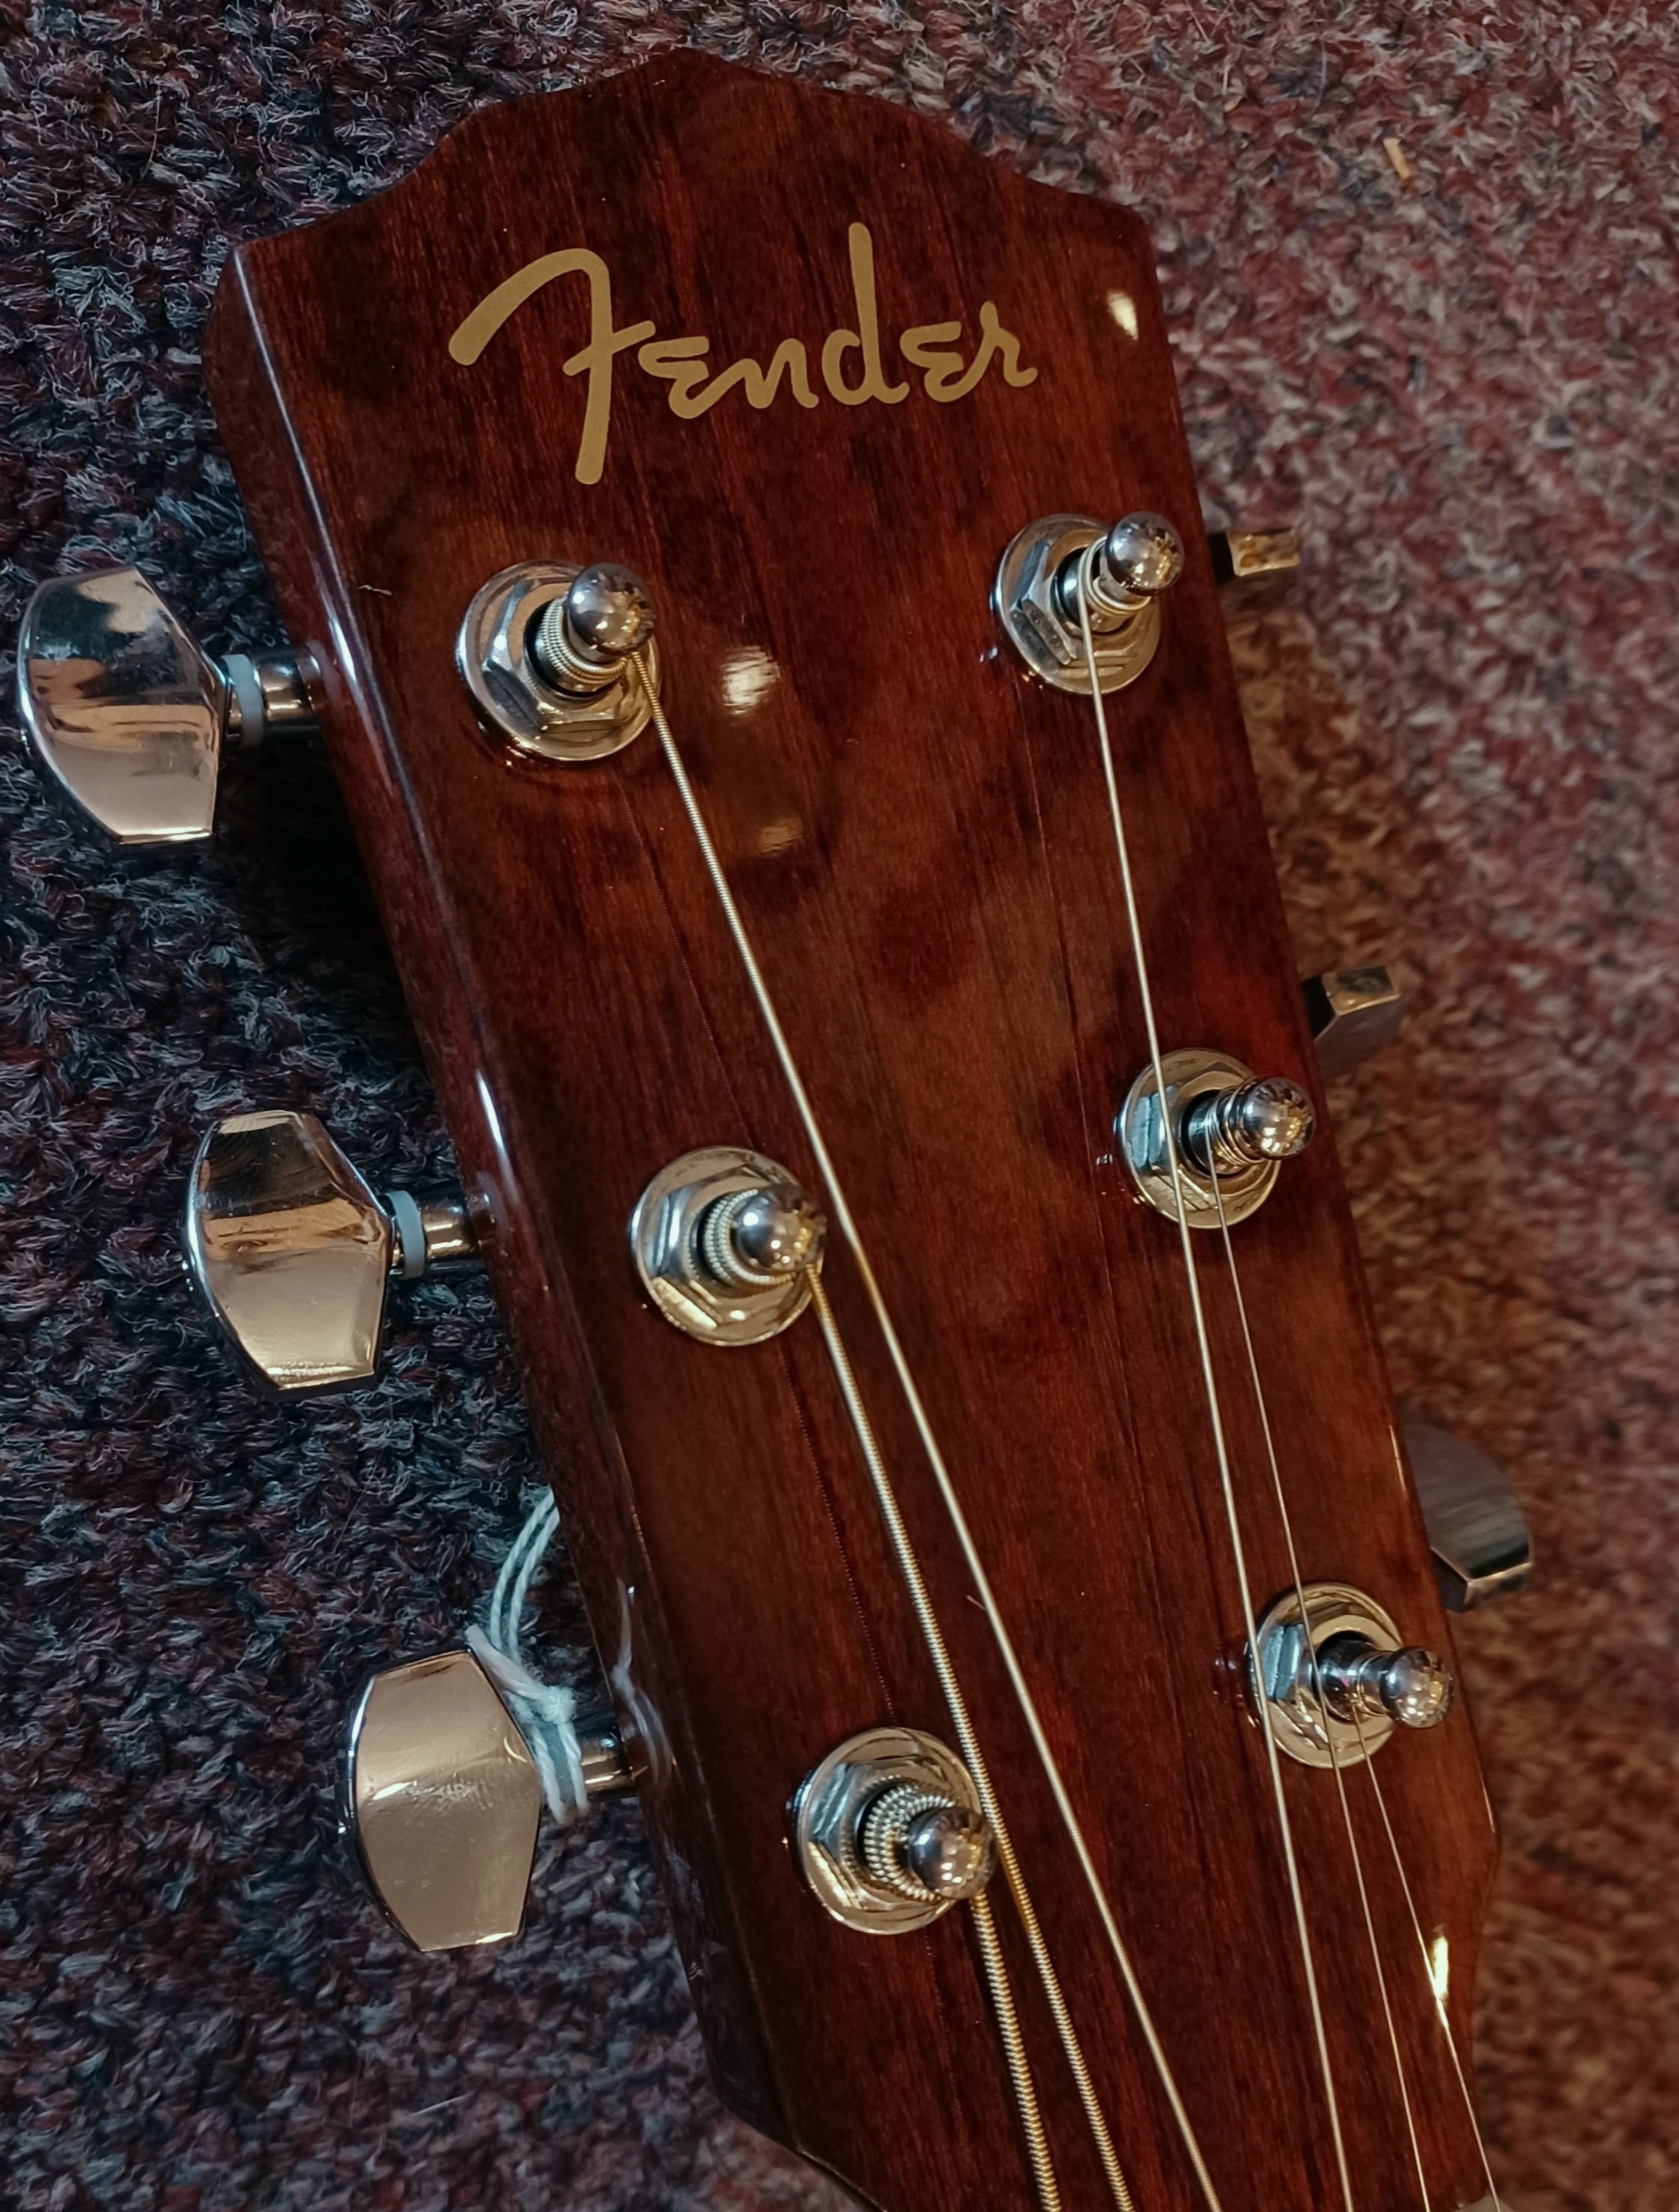 ~Fender Acoustics~